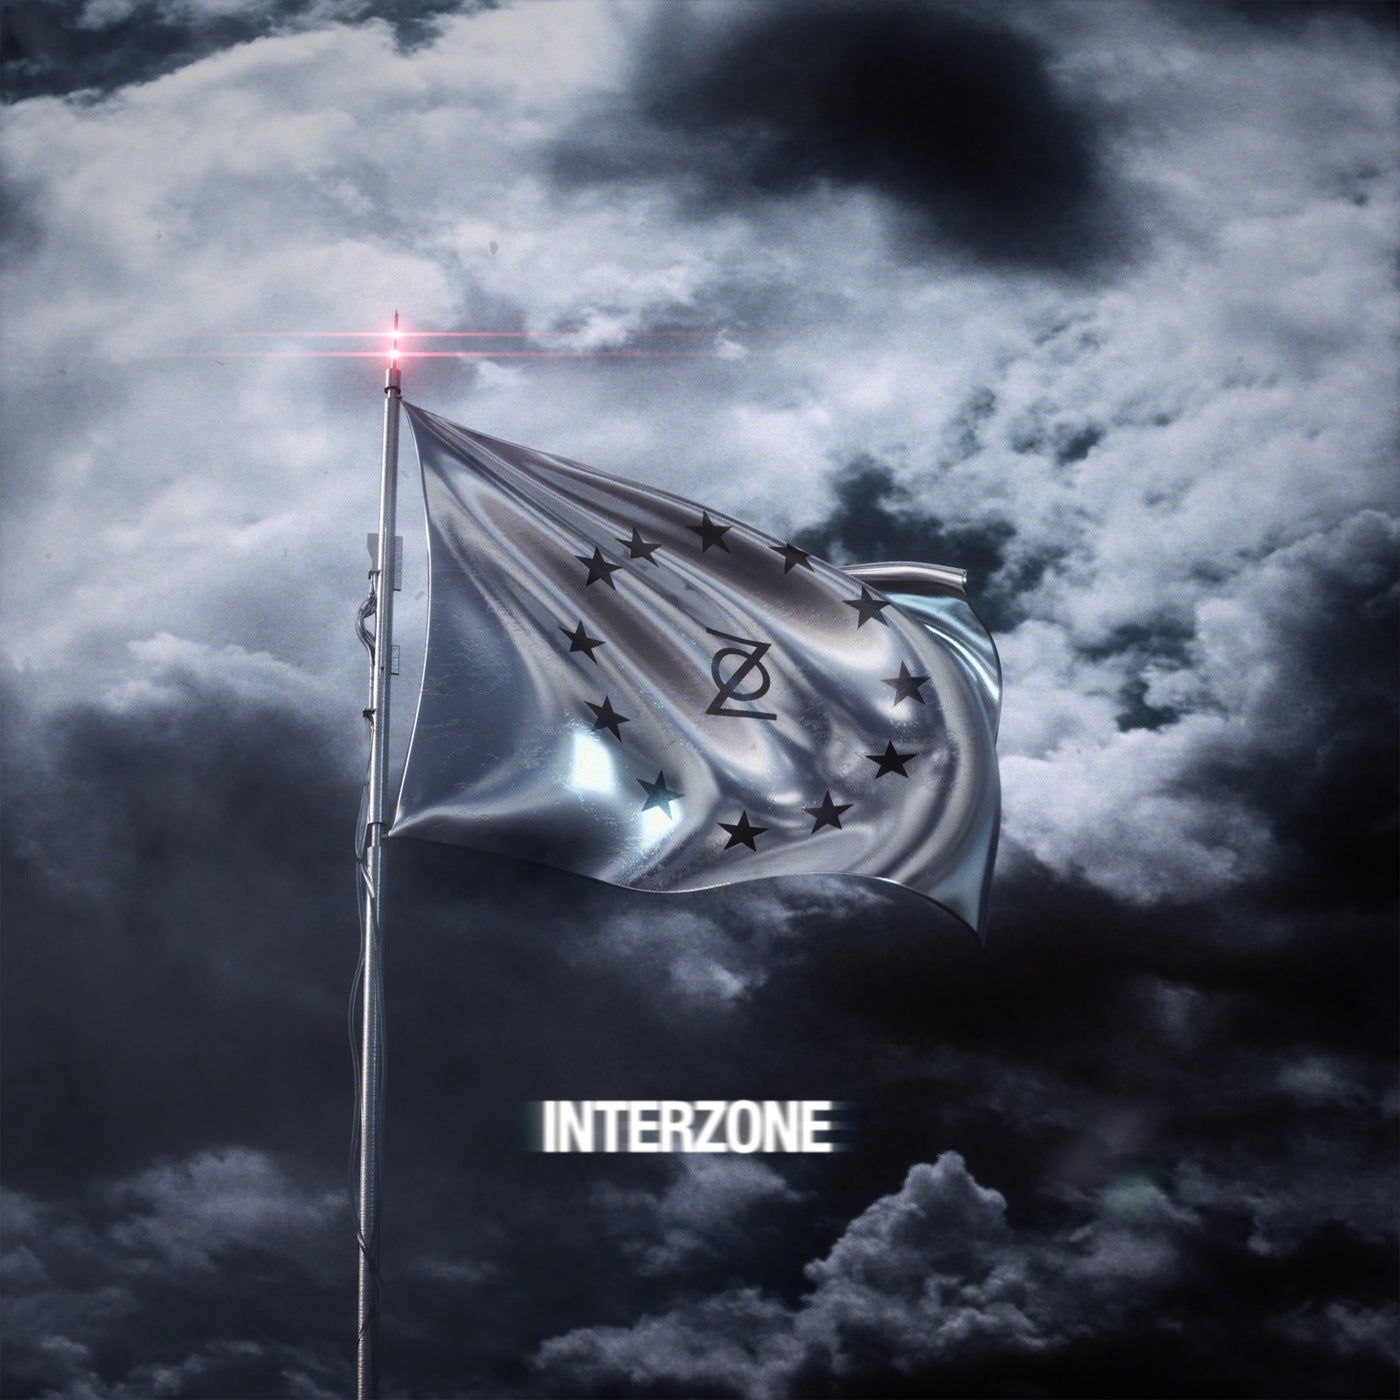 Download Interzone on Electrobuzz